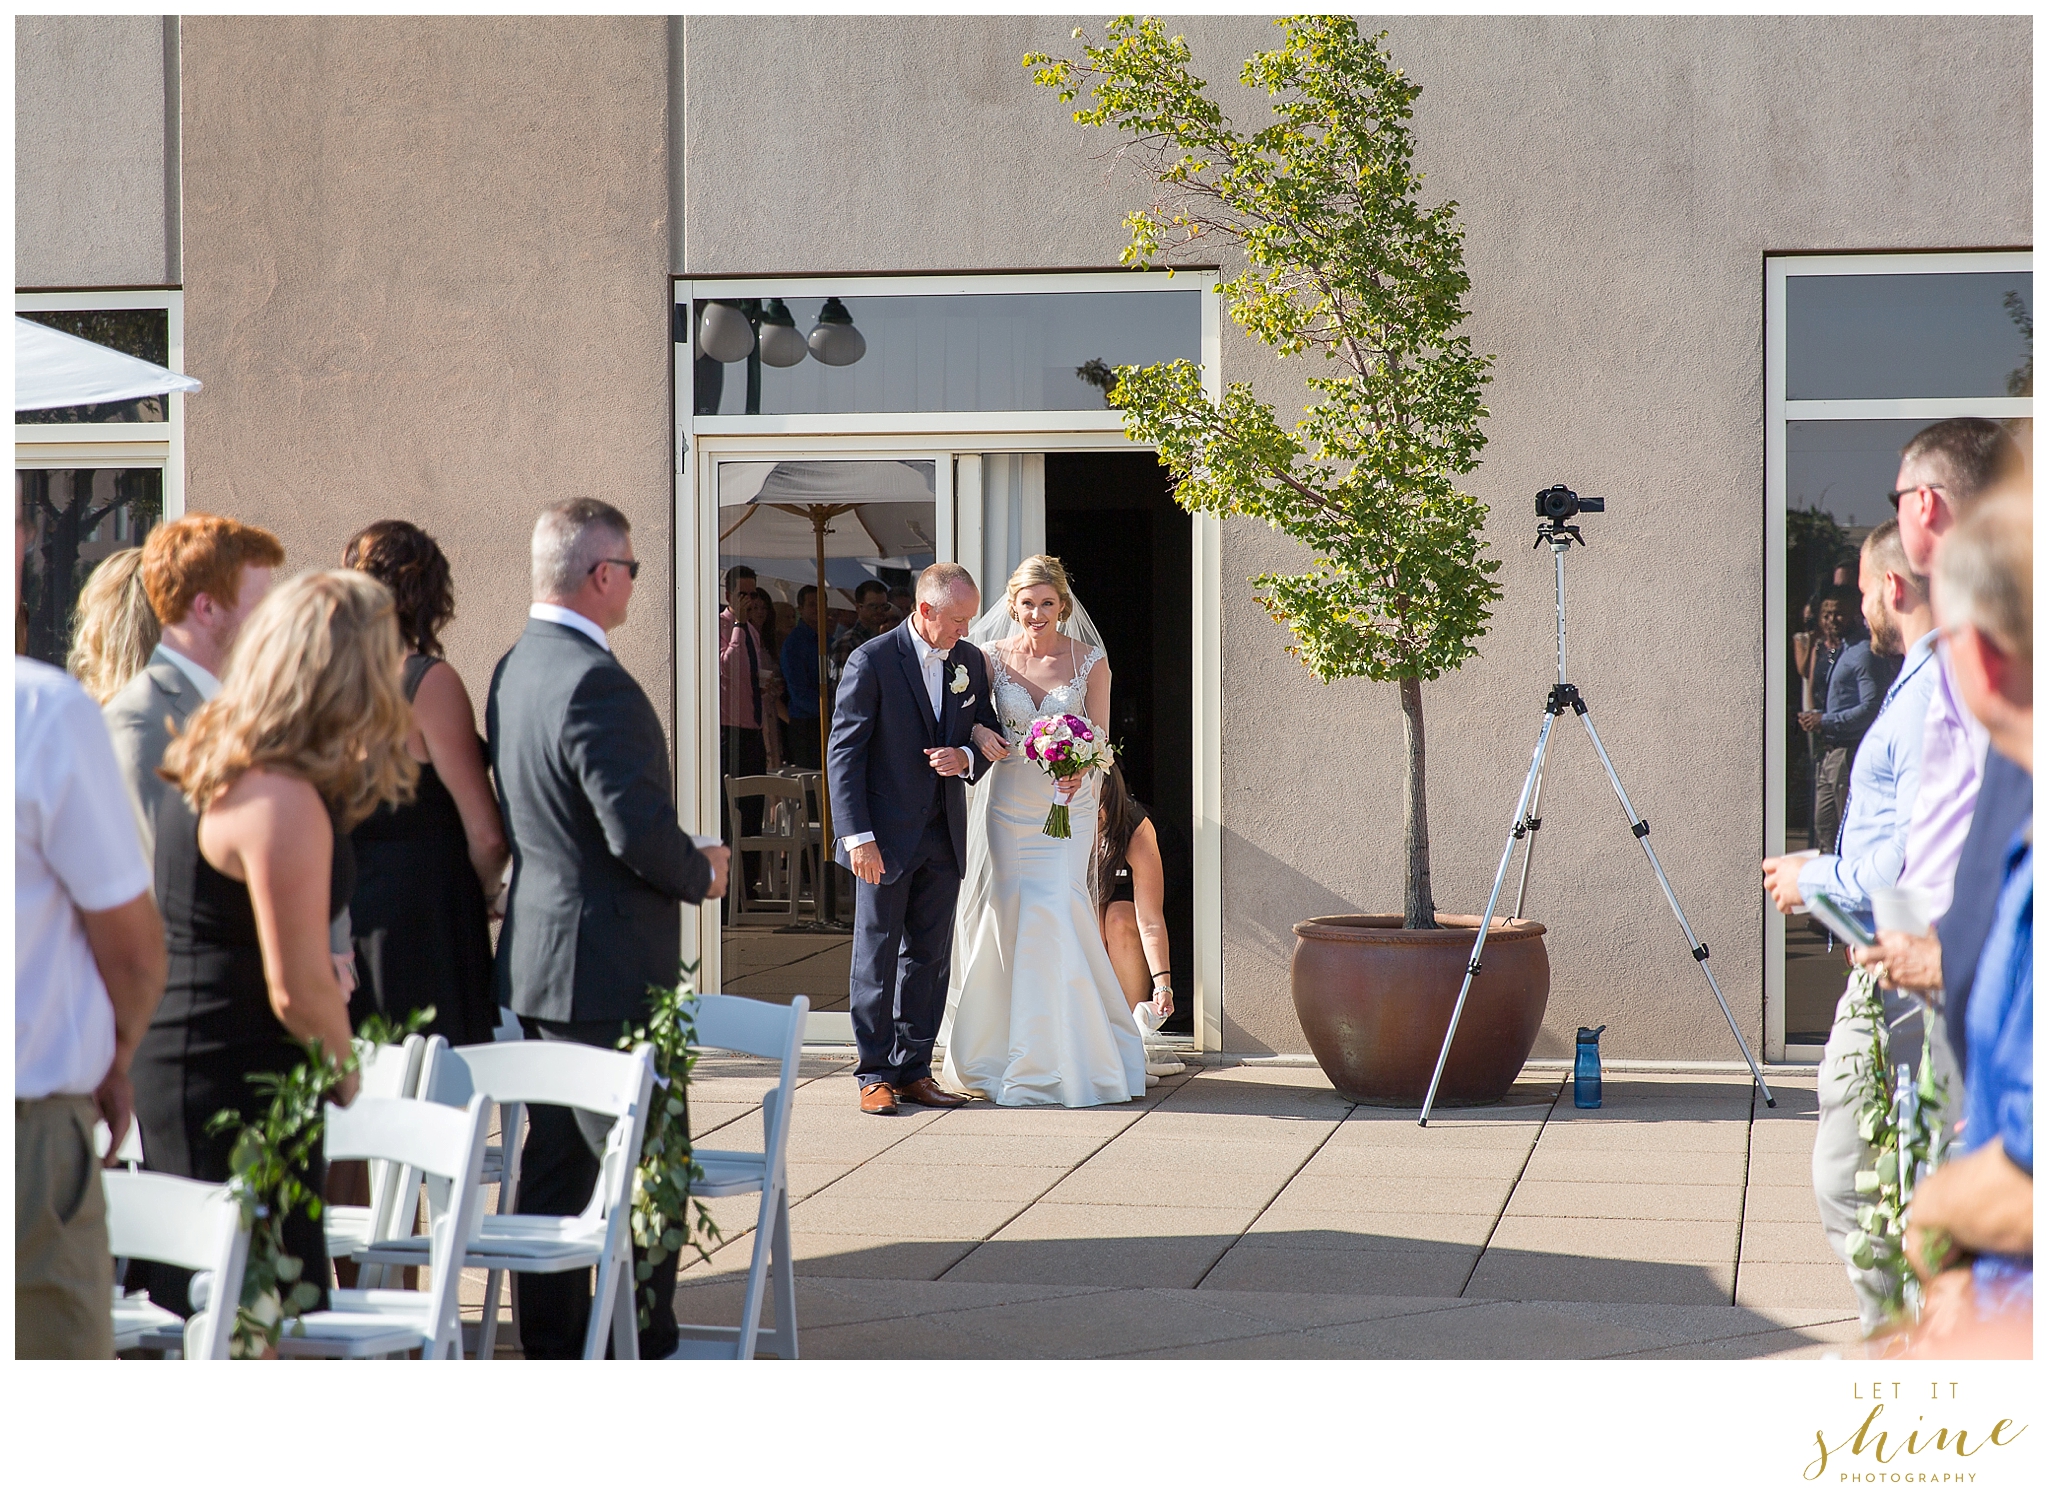 The Grove Hotel Boise Wedding 2017 Let it Shine Photography-0274.jpg